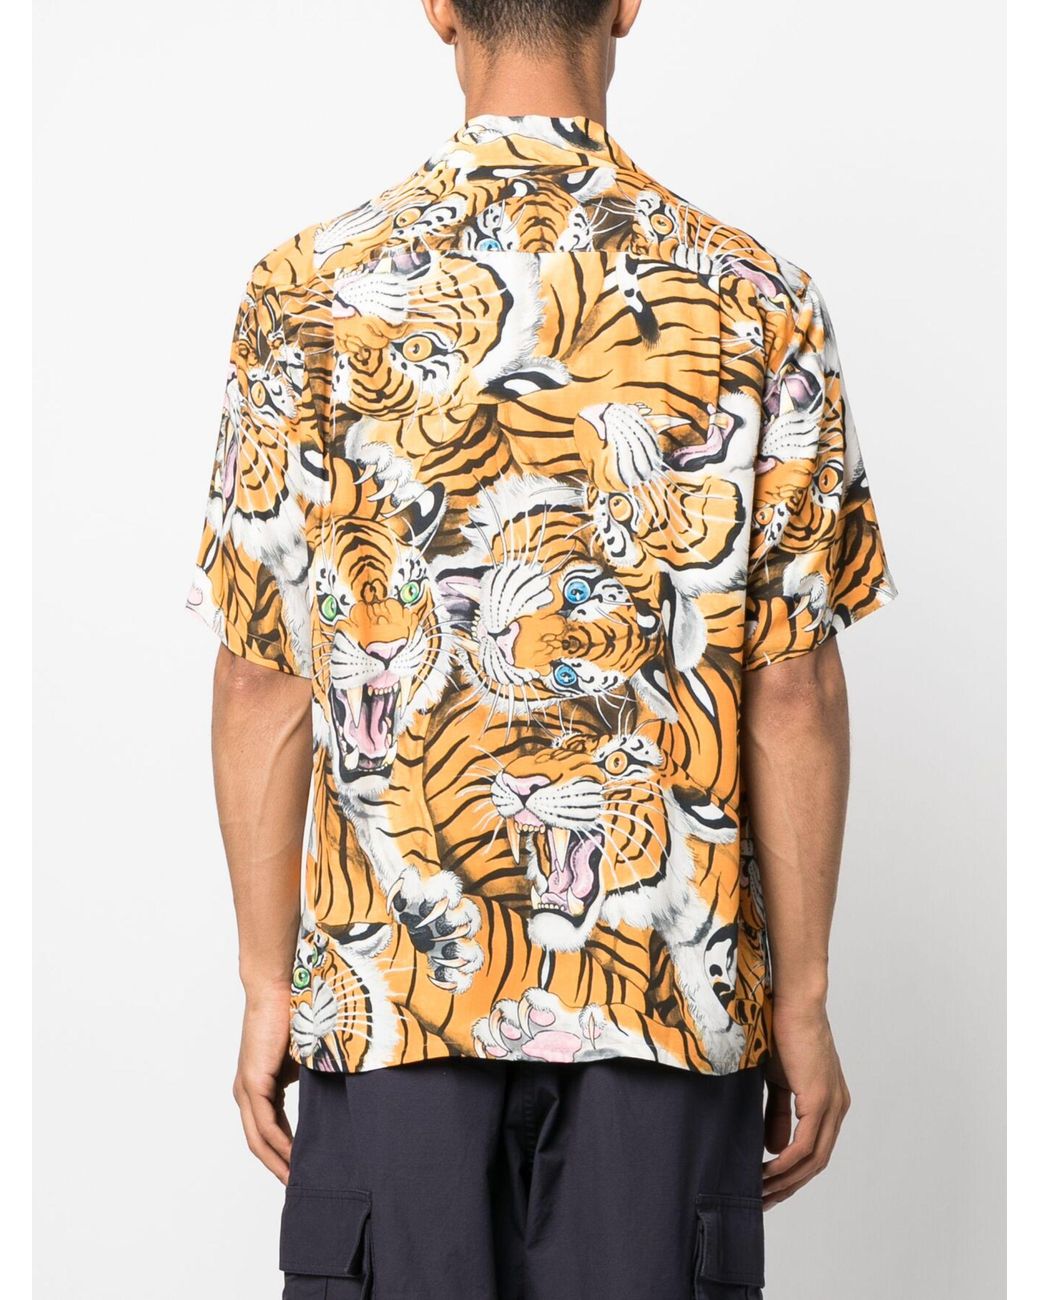 Wacko Maria X Tim Lehi Orange Tiger Print Shirt in Metallic for 